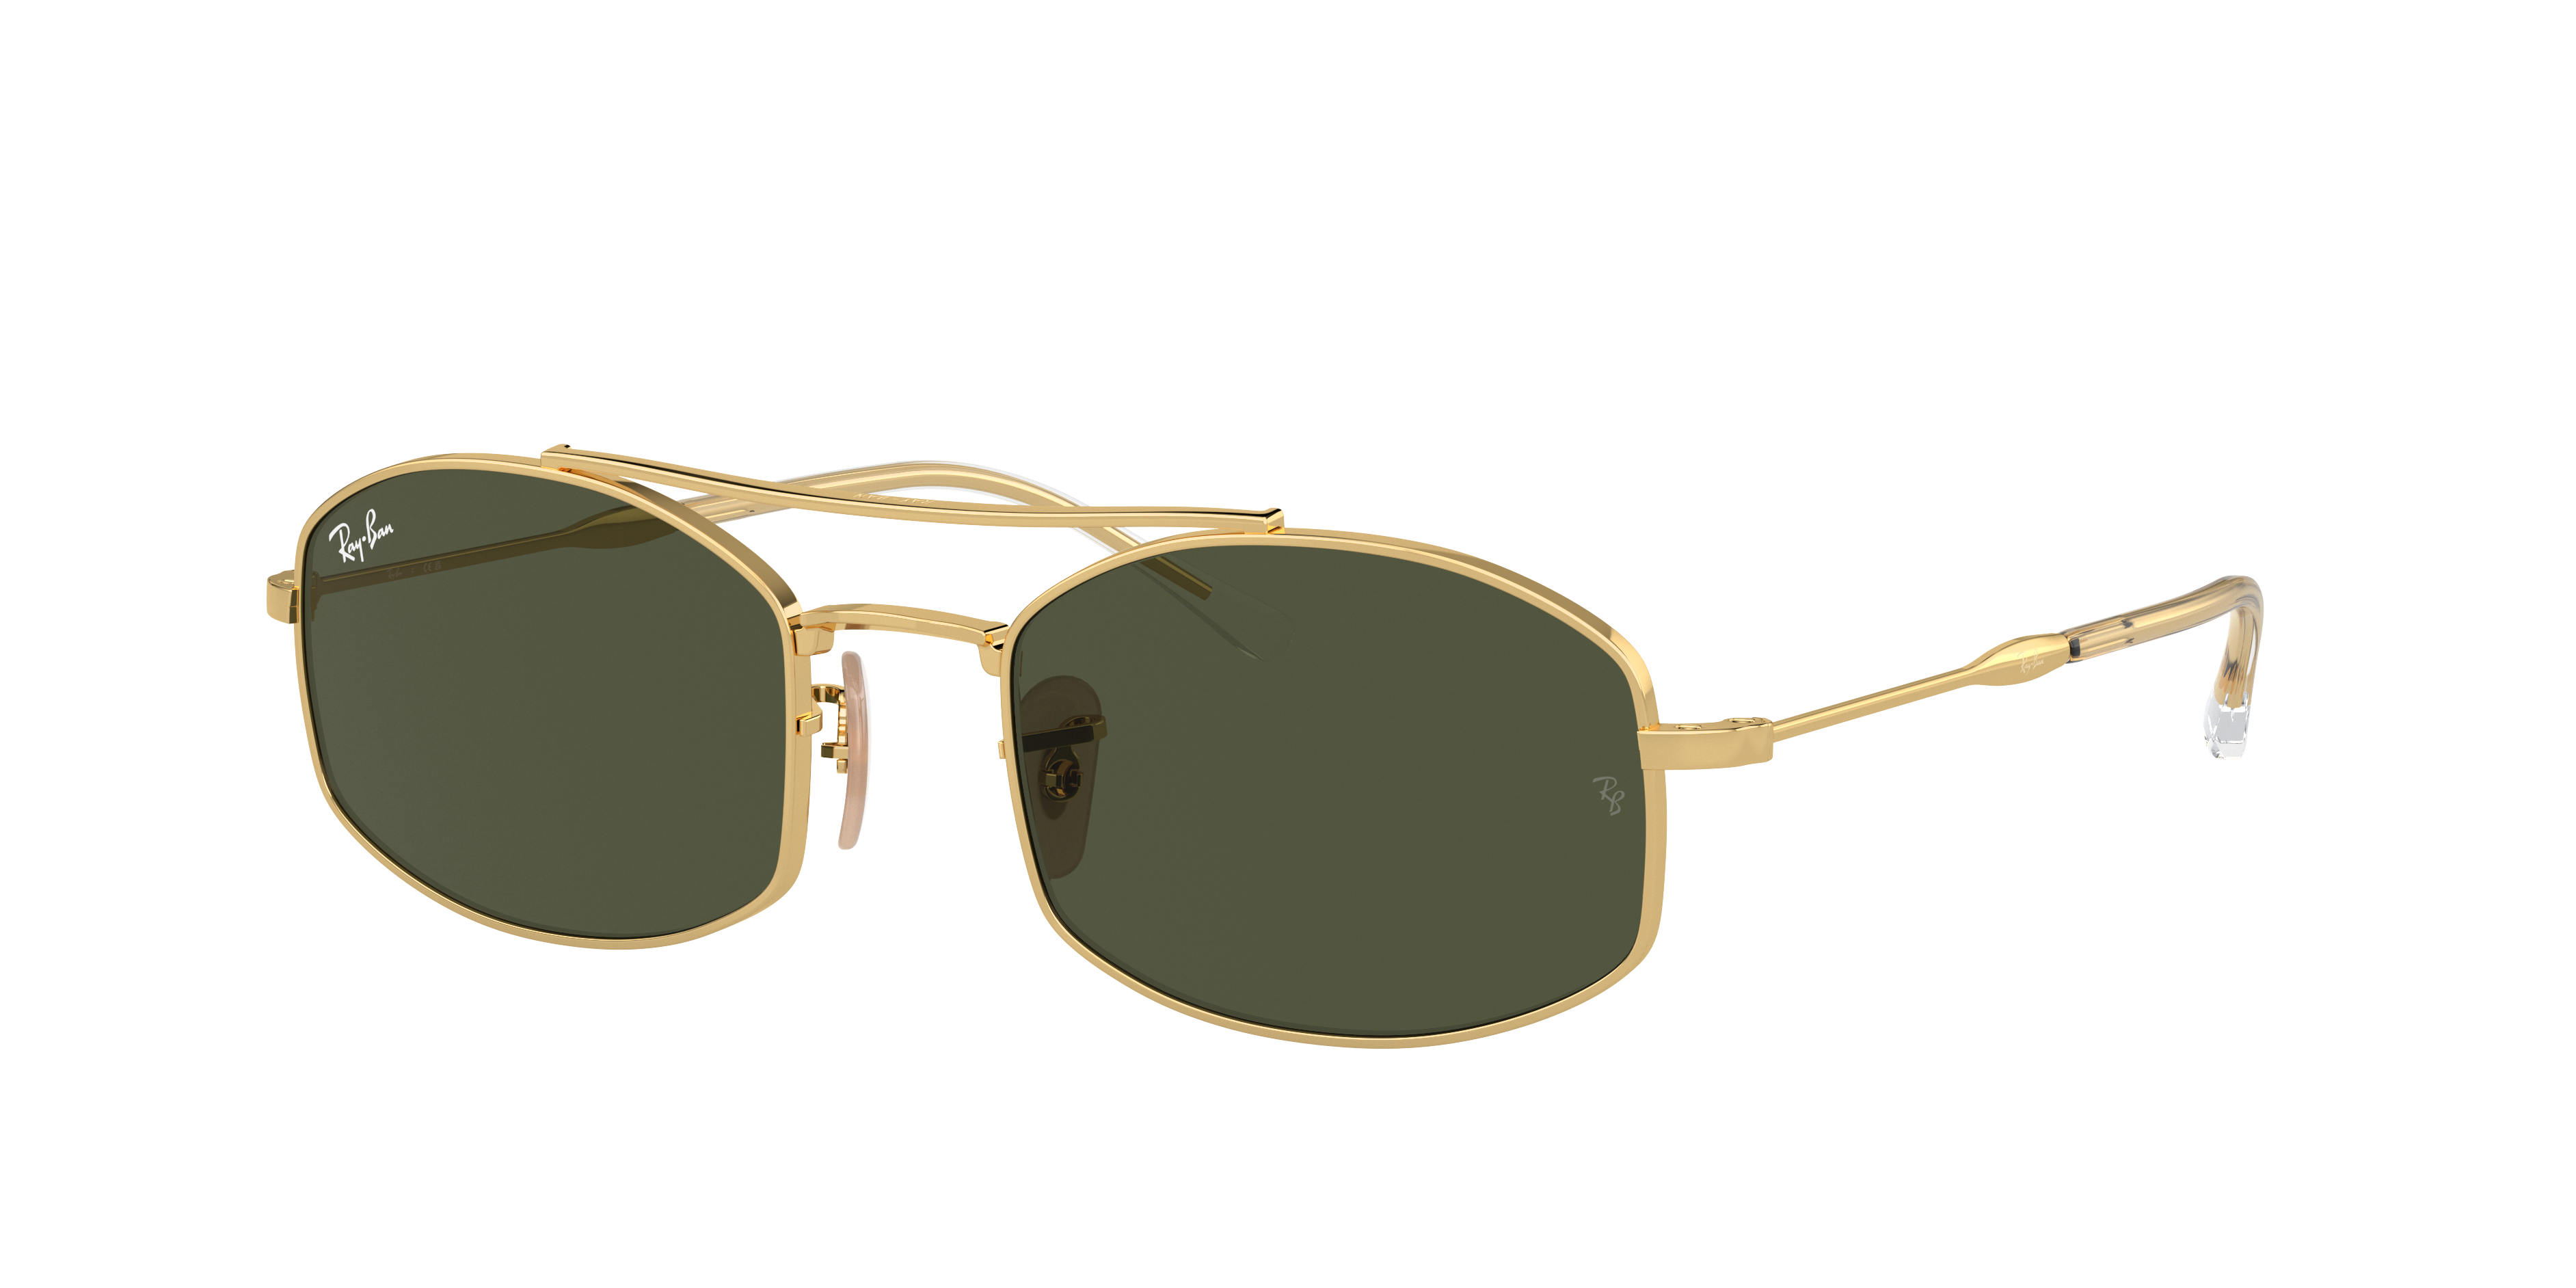 RAY-BAN RB3719 Gold - Unisex Sunglasses, Green Lens